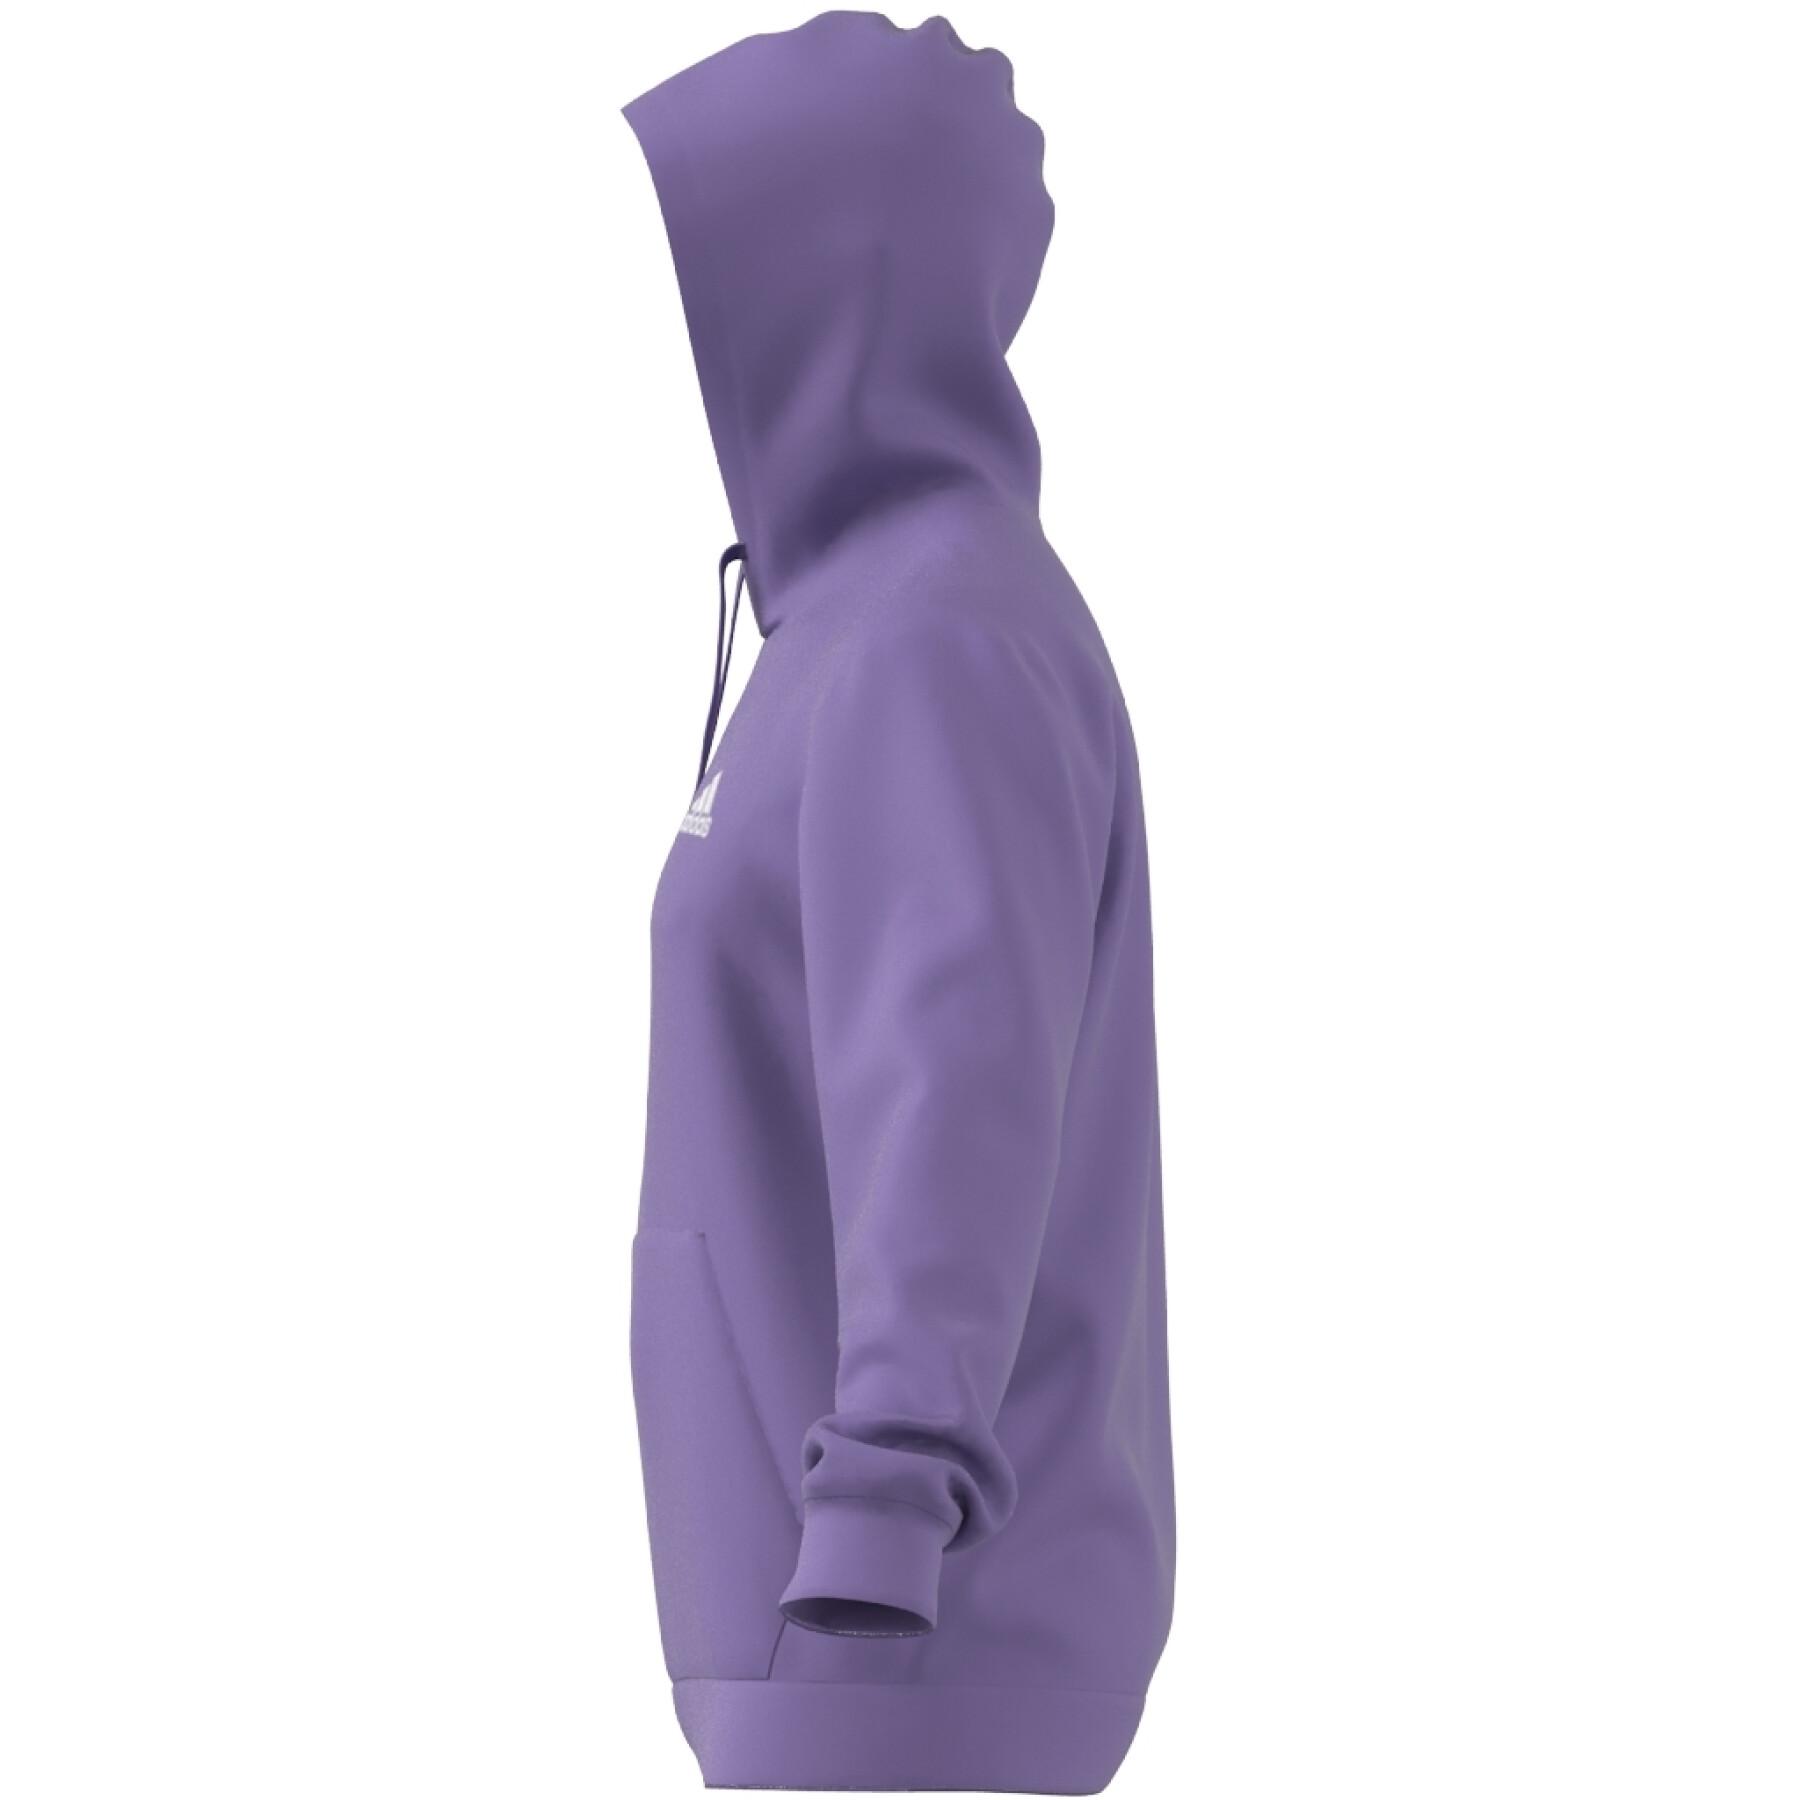 Sweatshirt hooded fleece adidas Essentials